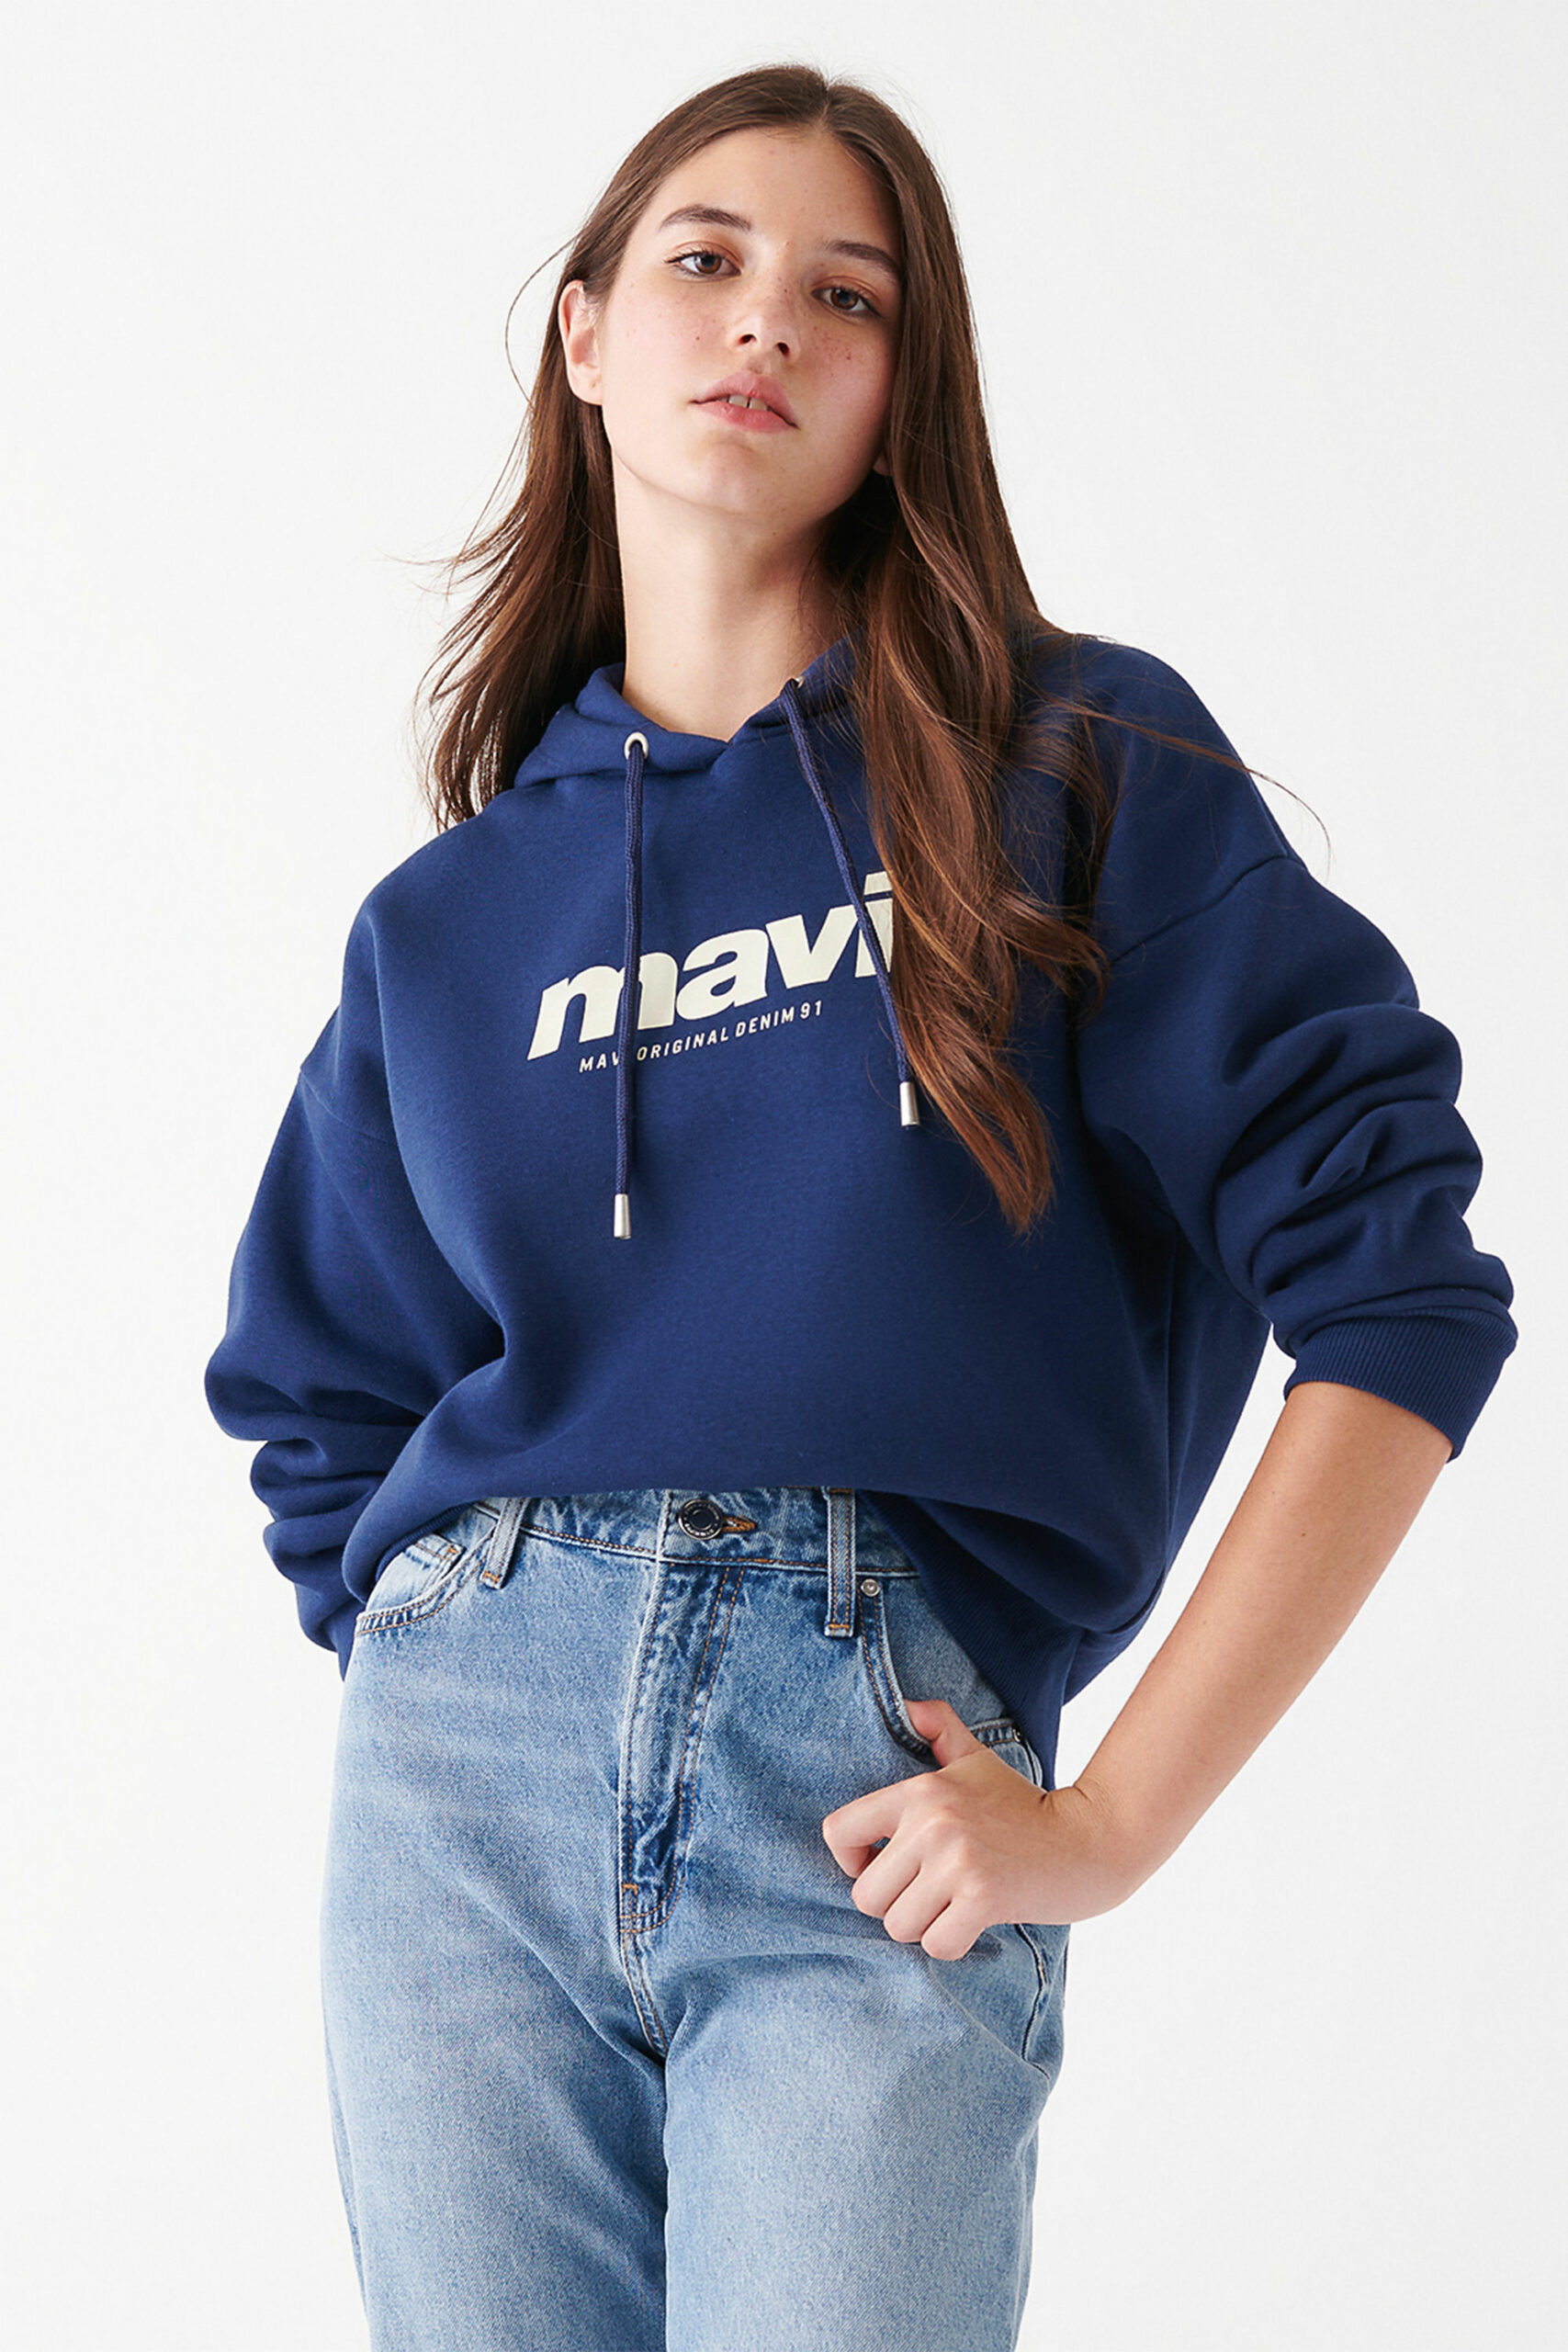 nsendm Womens Sweater Adult Female Clothes Mens Soft Sweatshirt